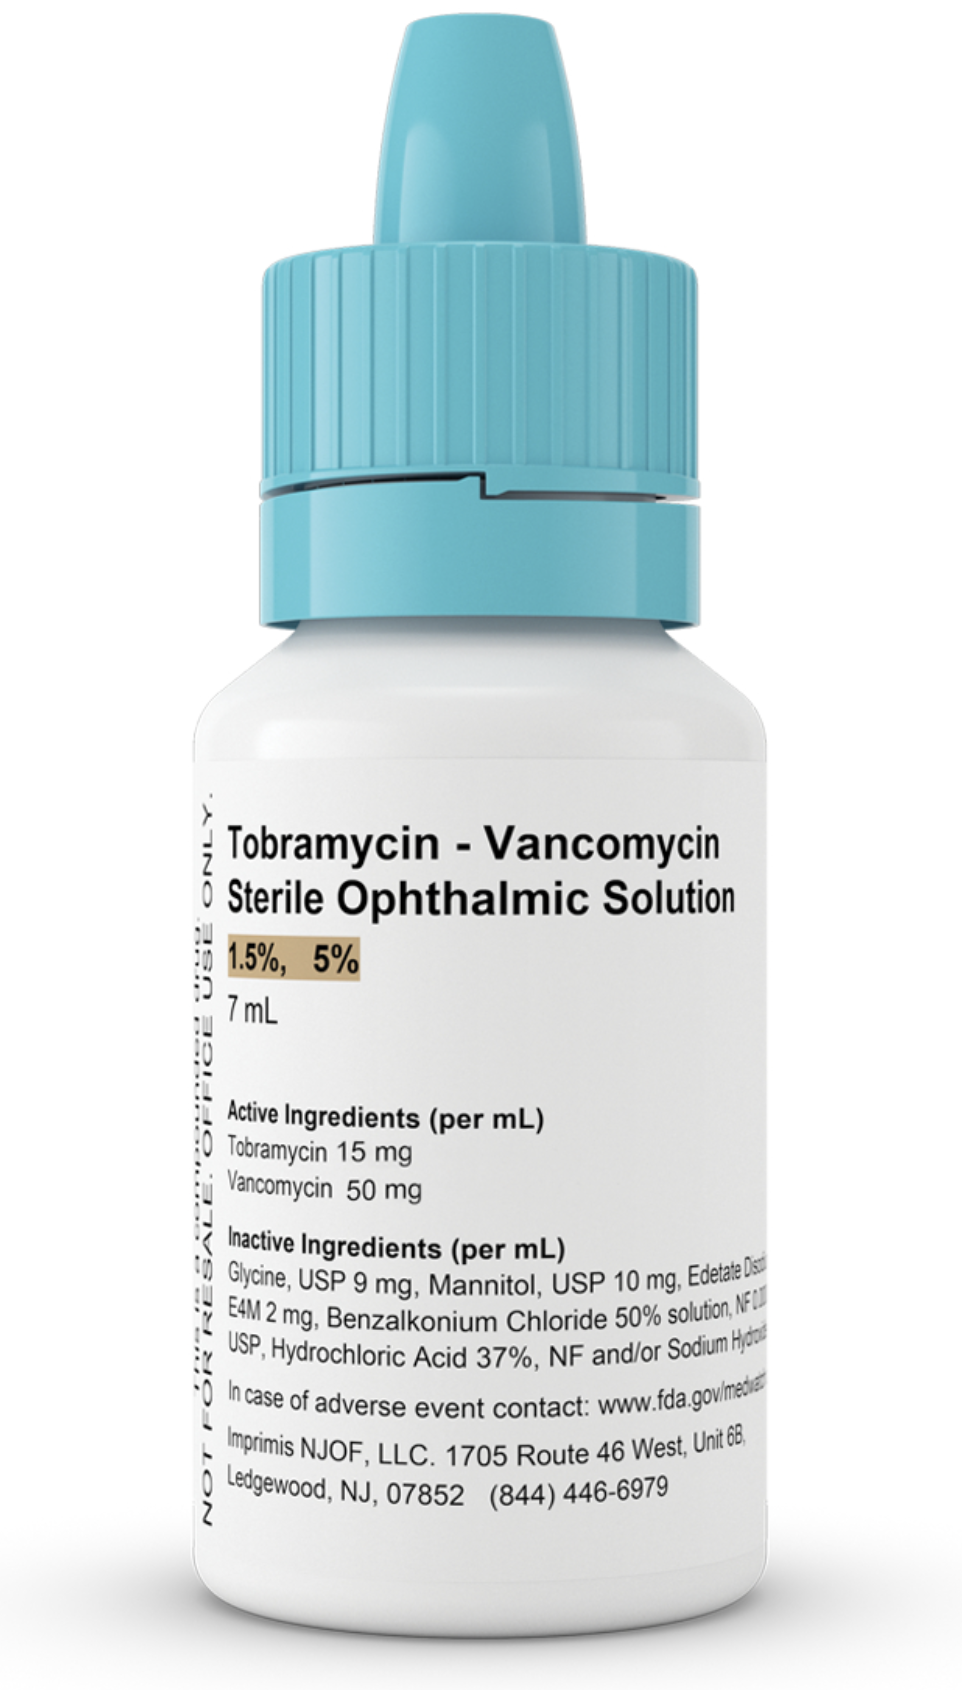 Fortisite compounded antibiotic (tobramycin 1.5% and vancomycin 5%).